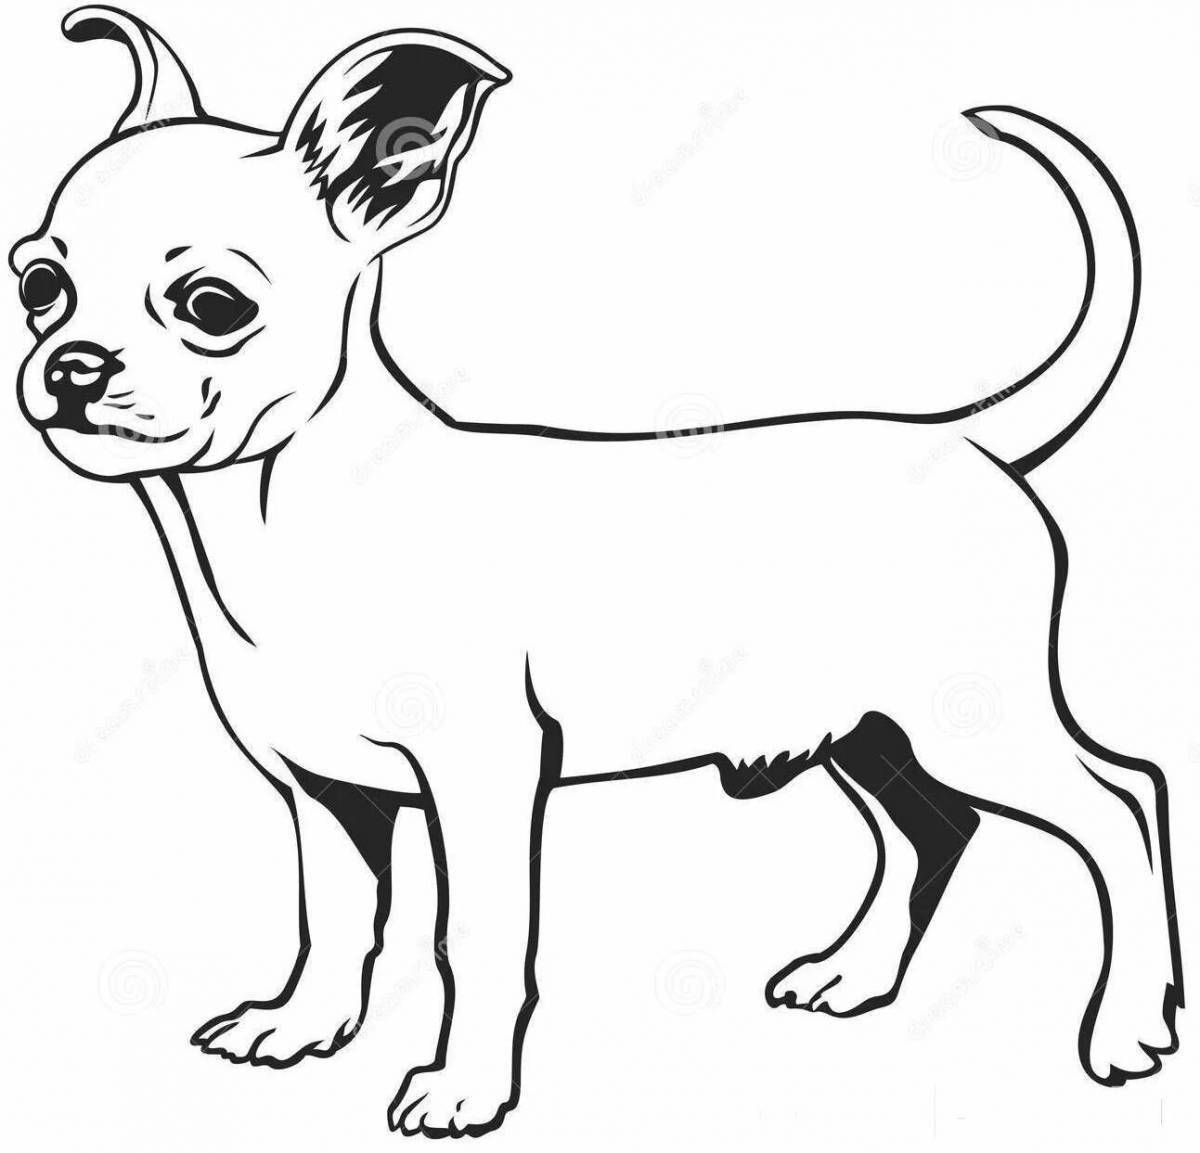 Chihuahua wavy coloring page